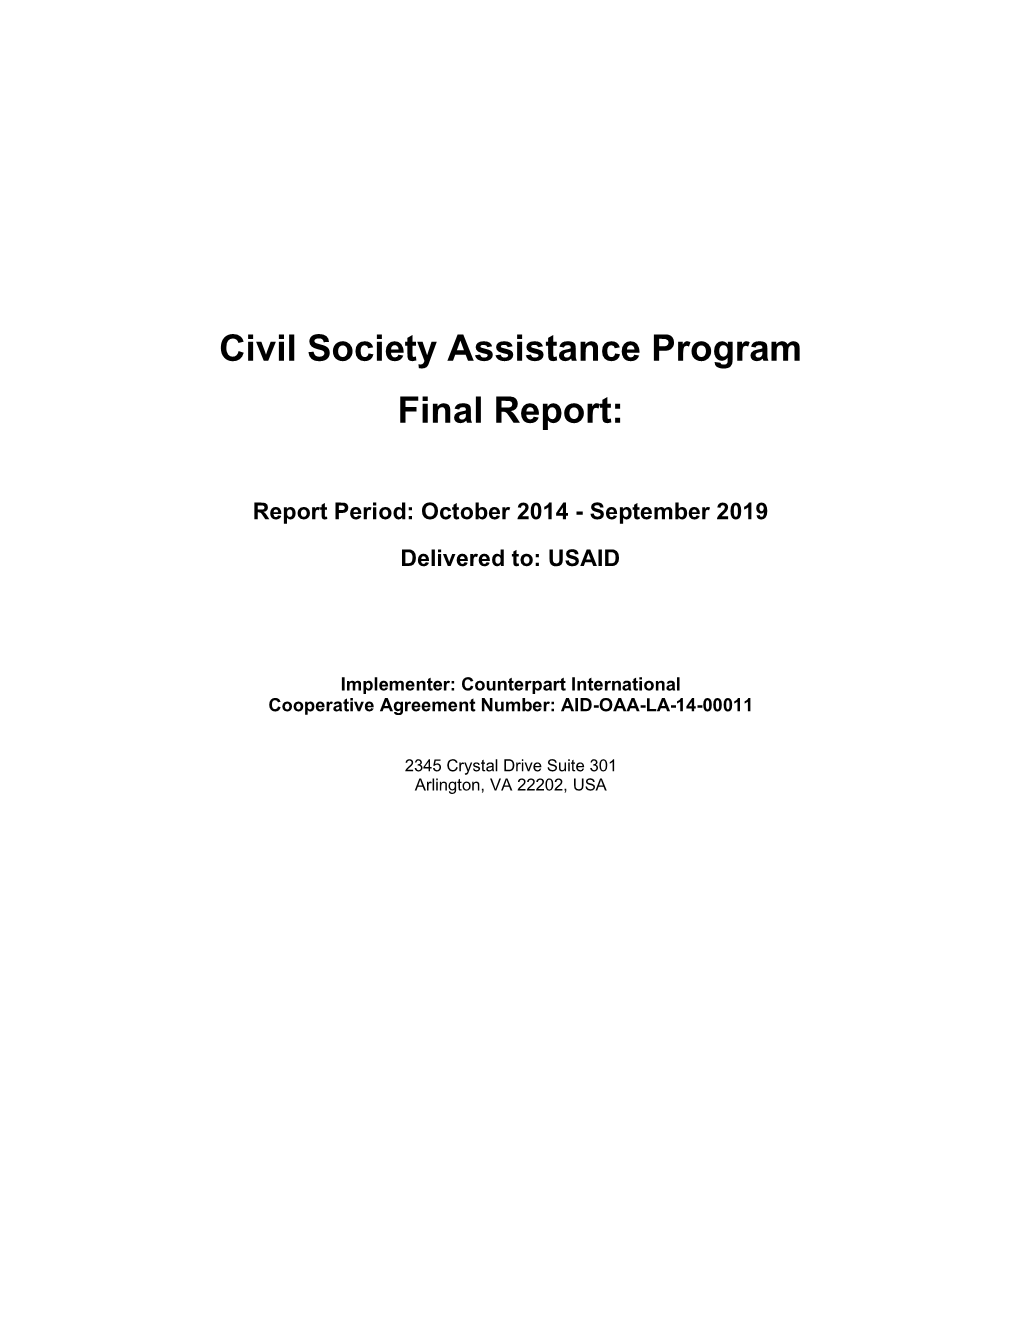 Civil Society Assistance Program Final Report